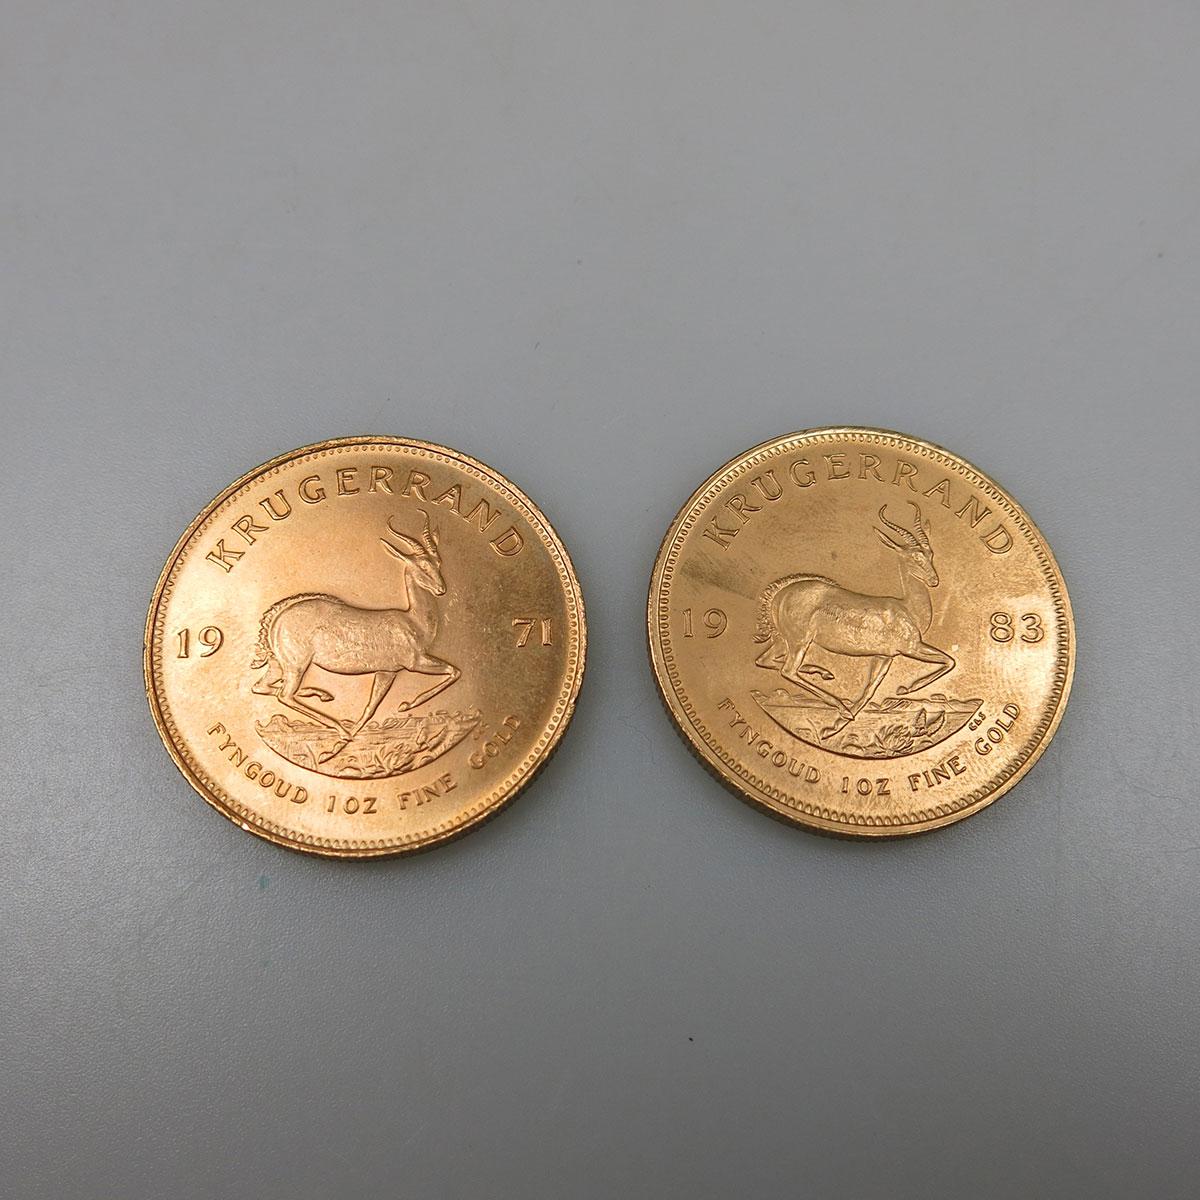 2 South African Krugerrands Gold Coins